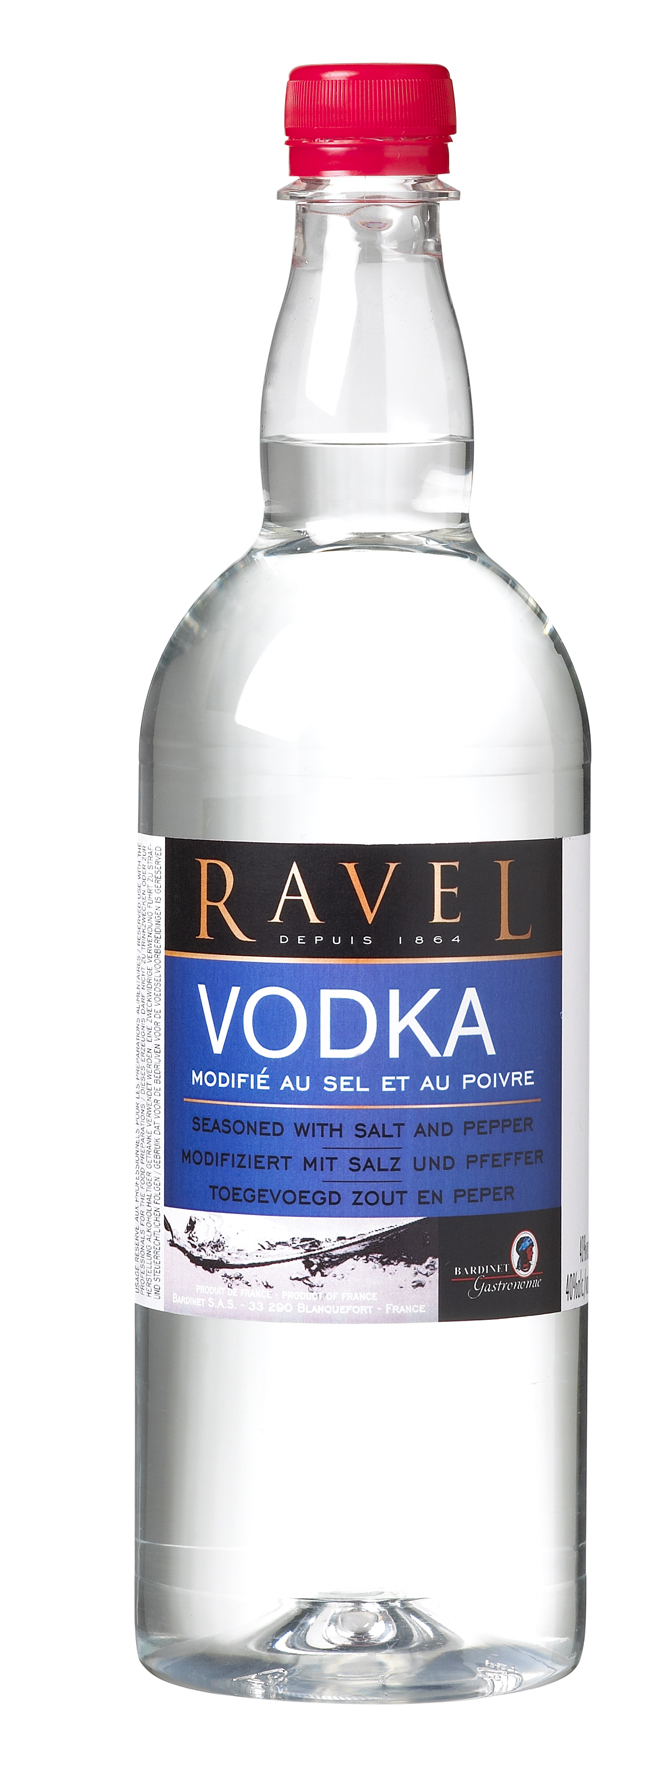 45006 Ravel vodka pet fles 1ltr